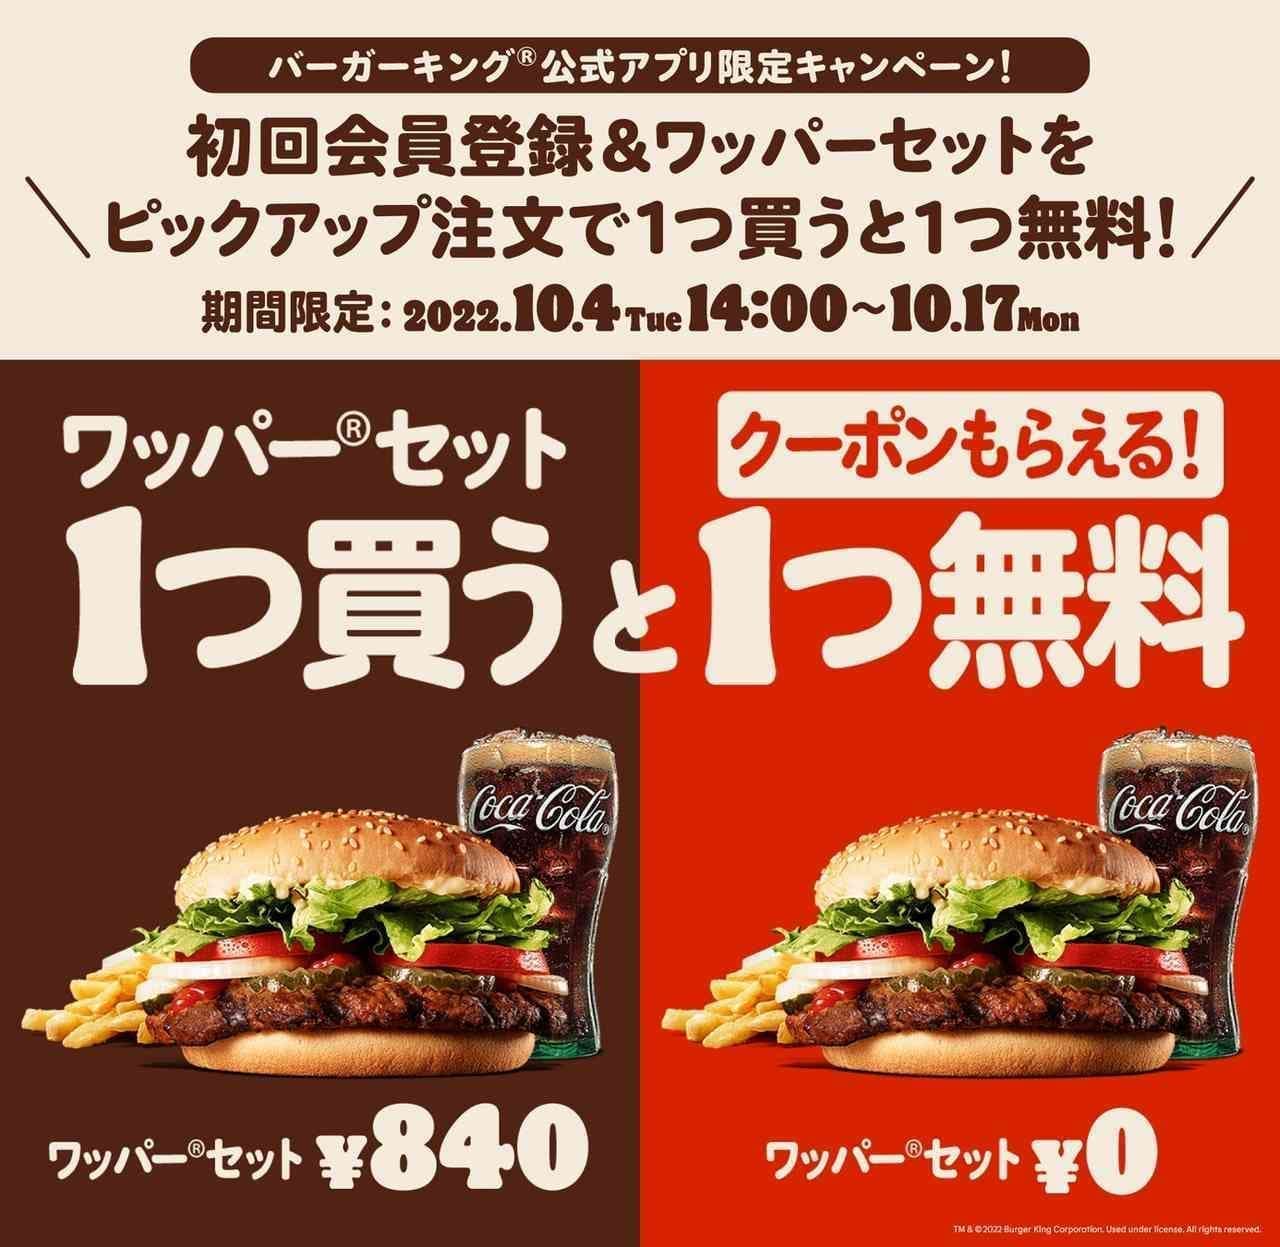 Burger King "Whopper Set" order one free coupon